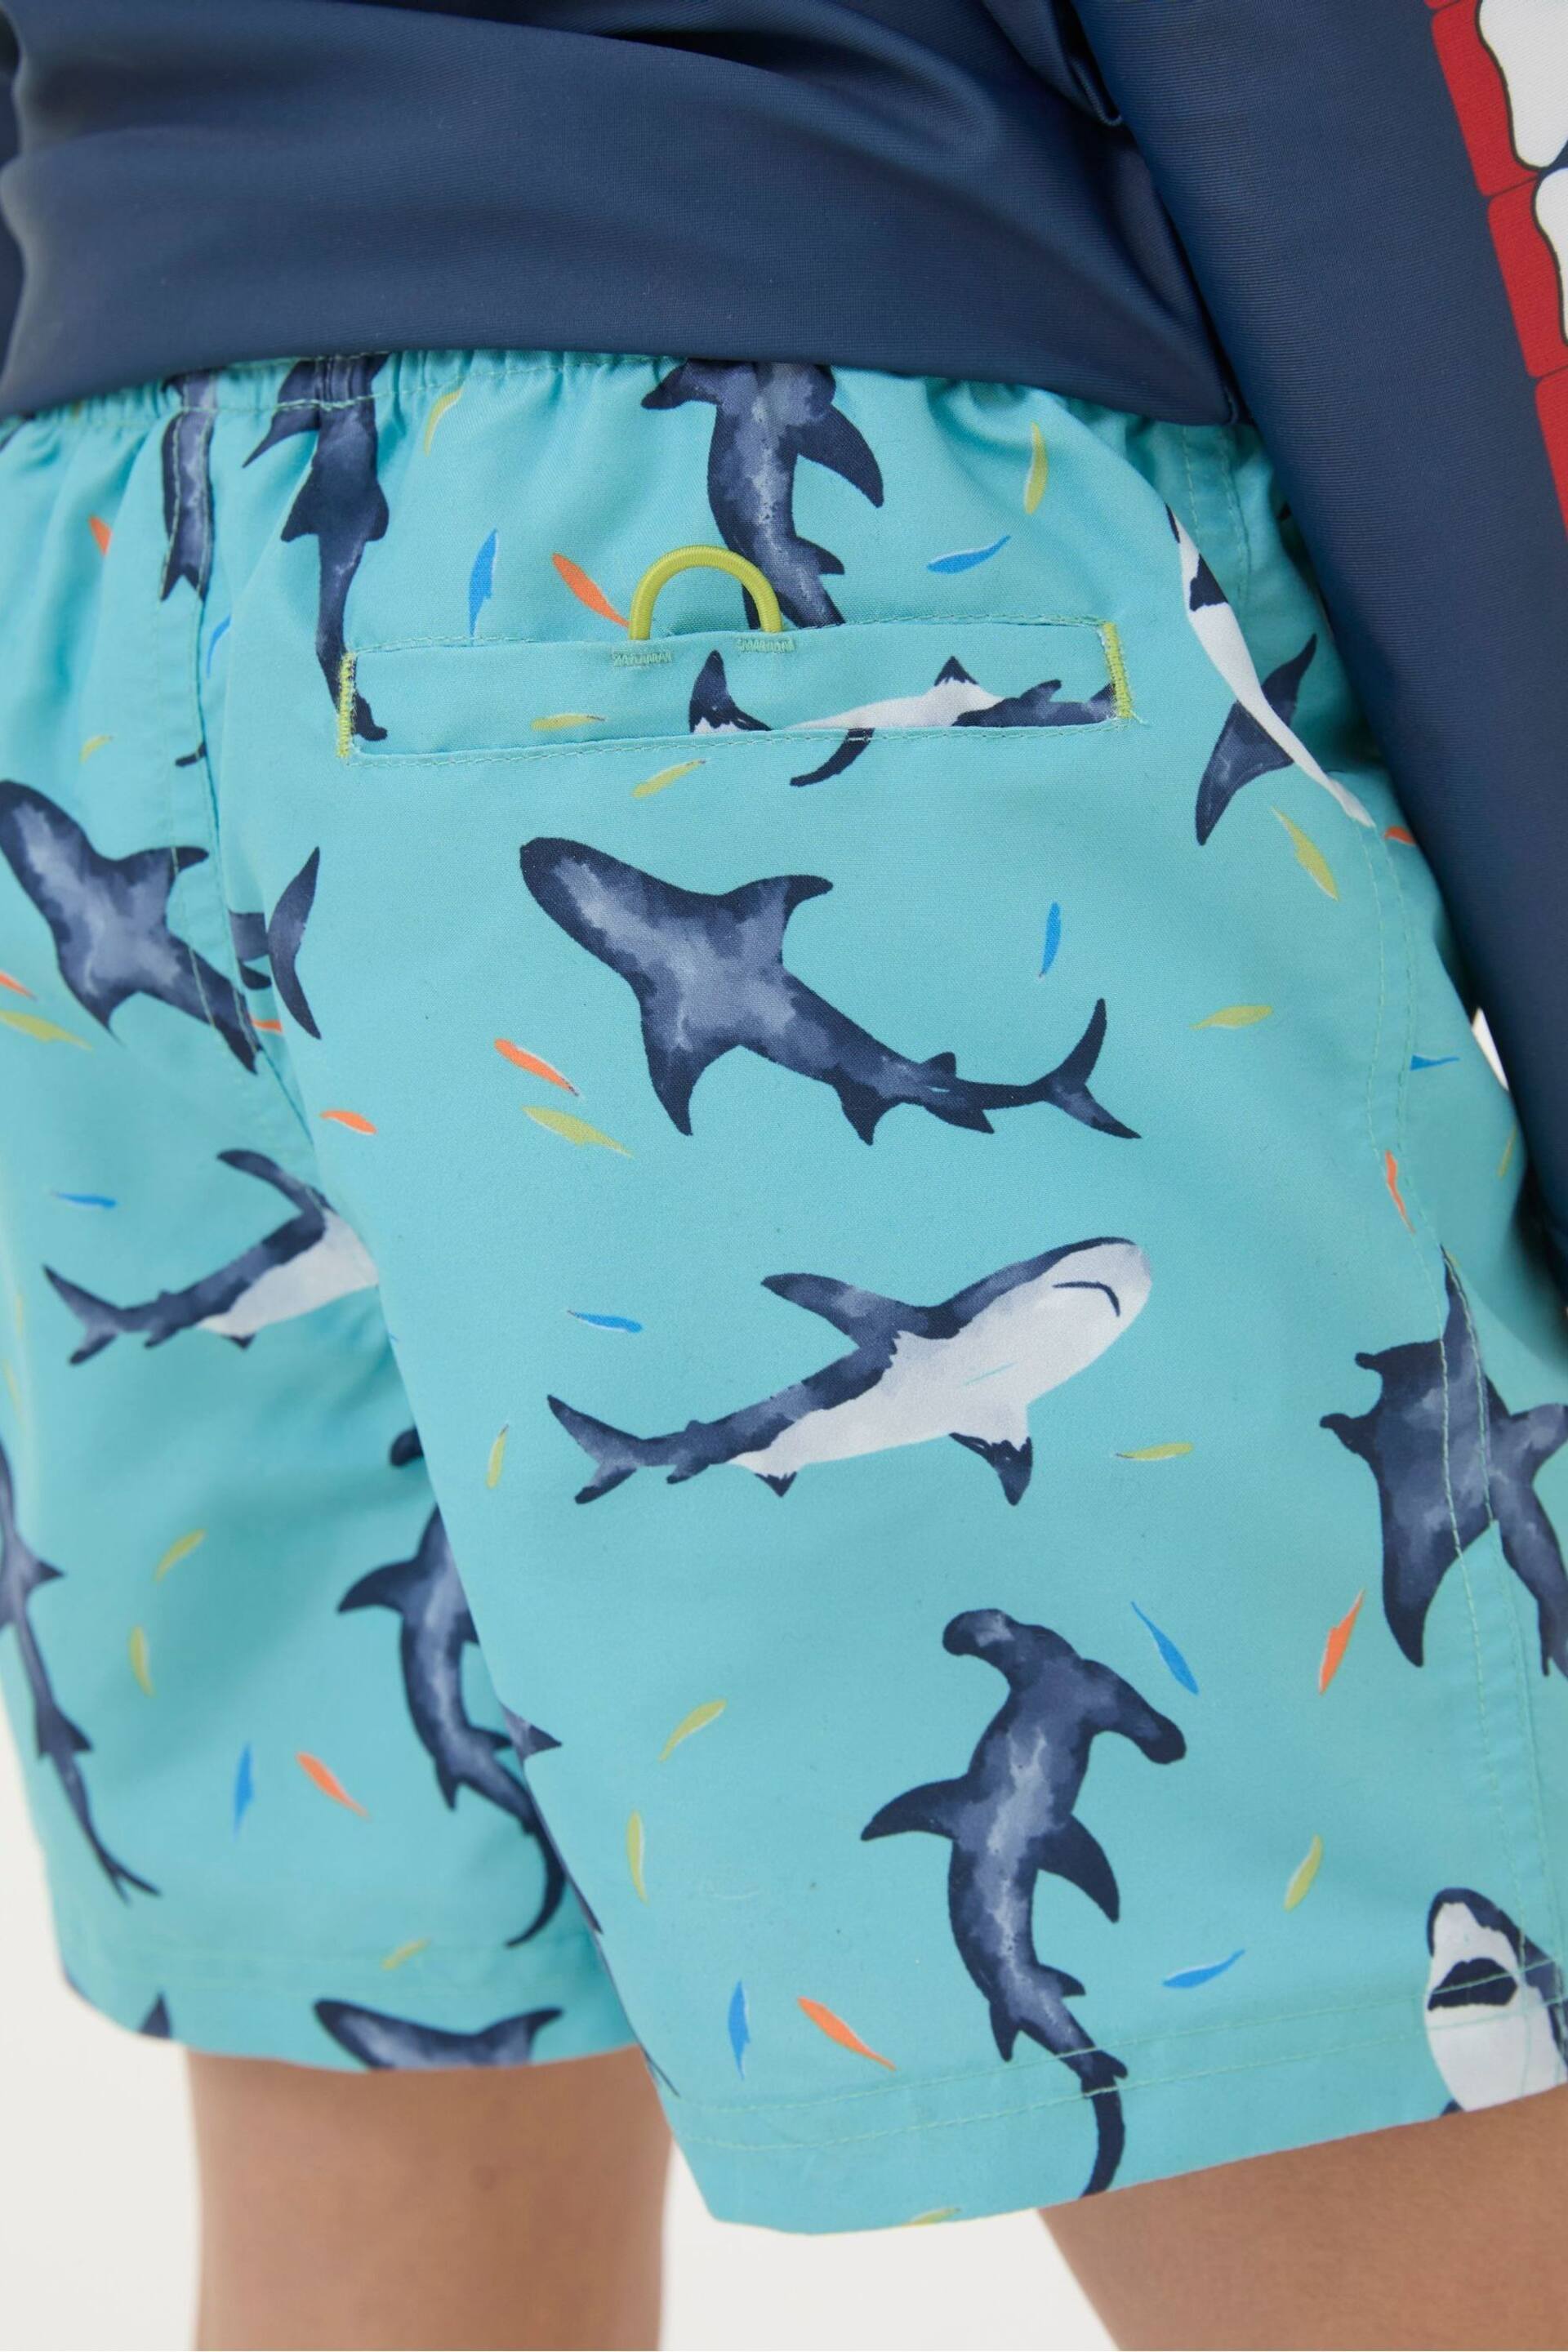 FatFace Blue Shark Swim Shorts - Image 2 of 4